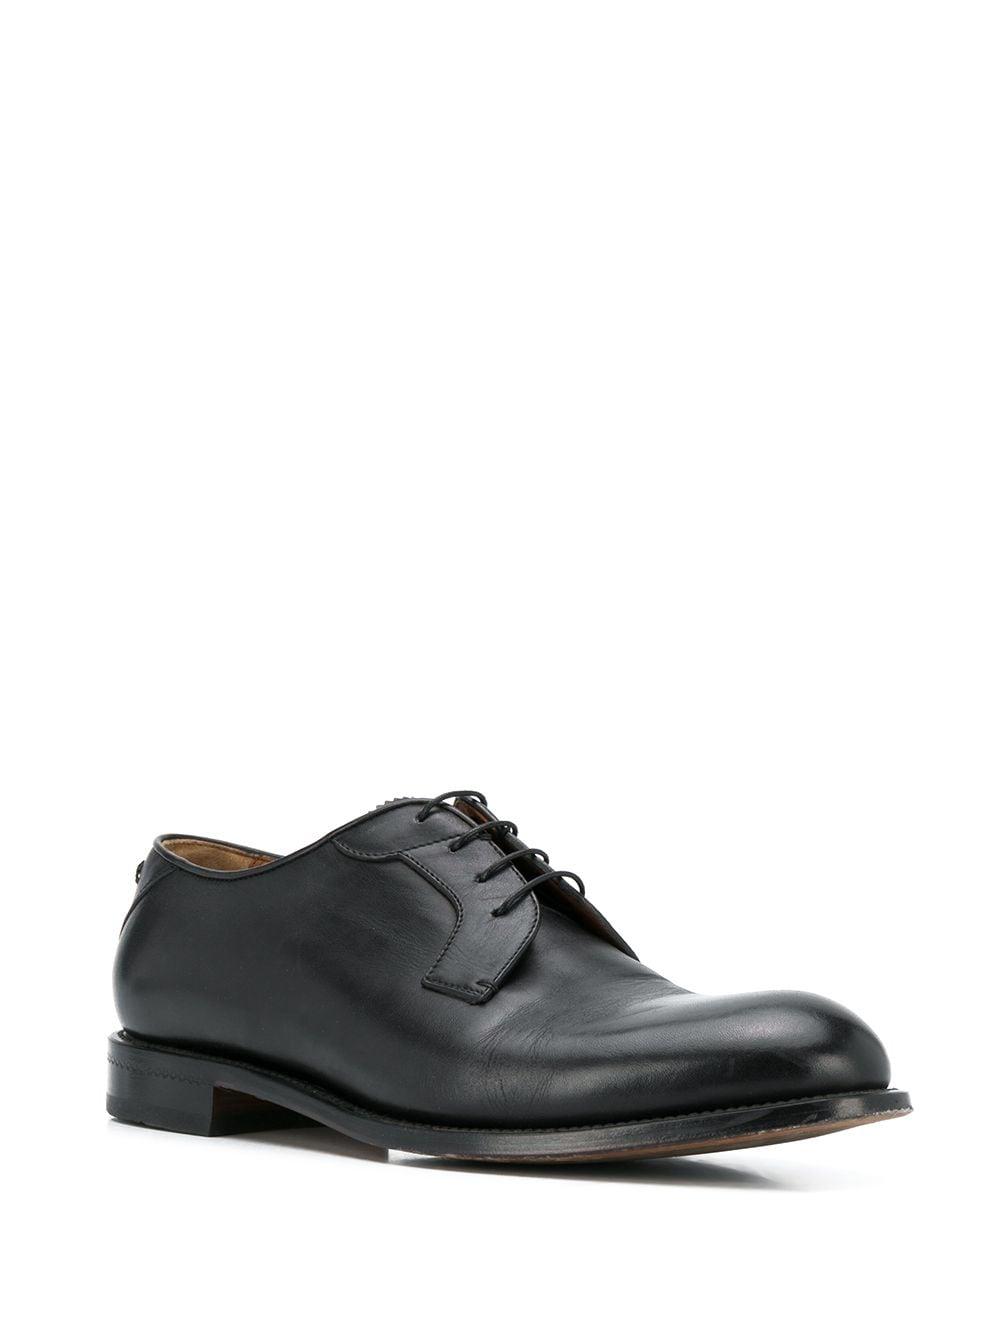 Ermenegildo Zegna Leather Formal Derby Shoes in Black for Men - Lyst